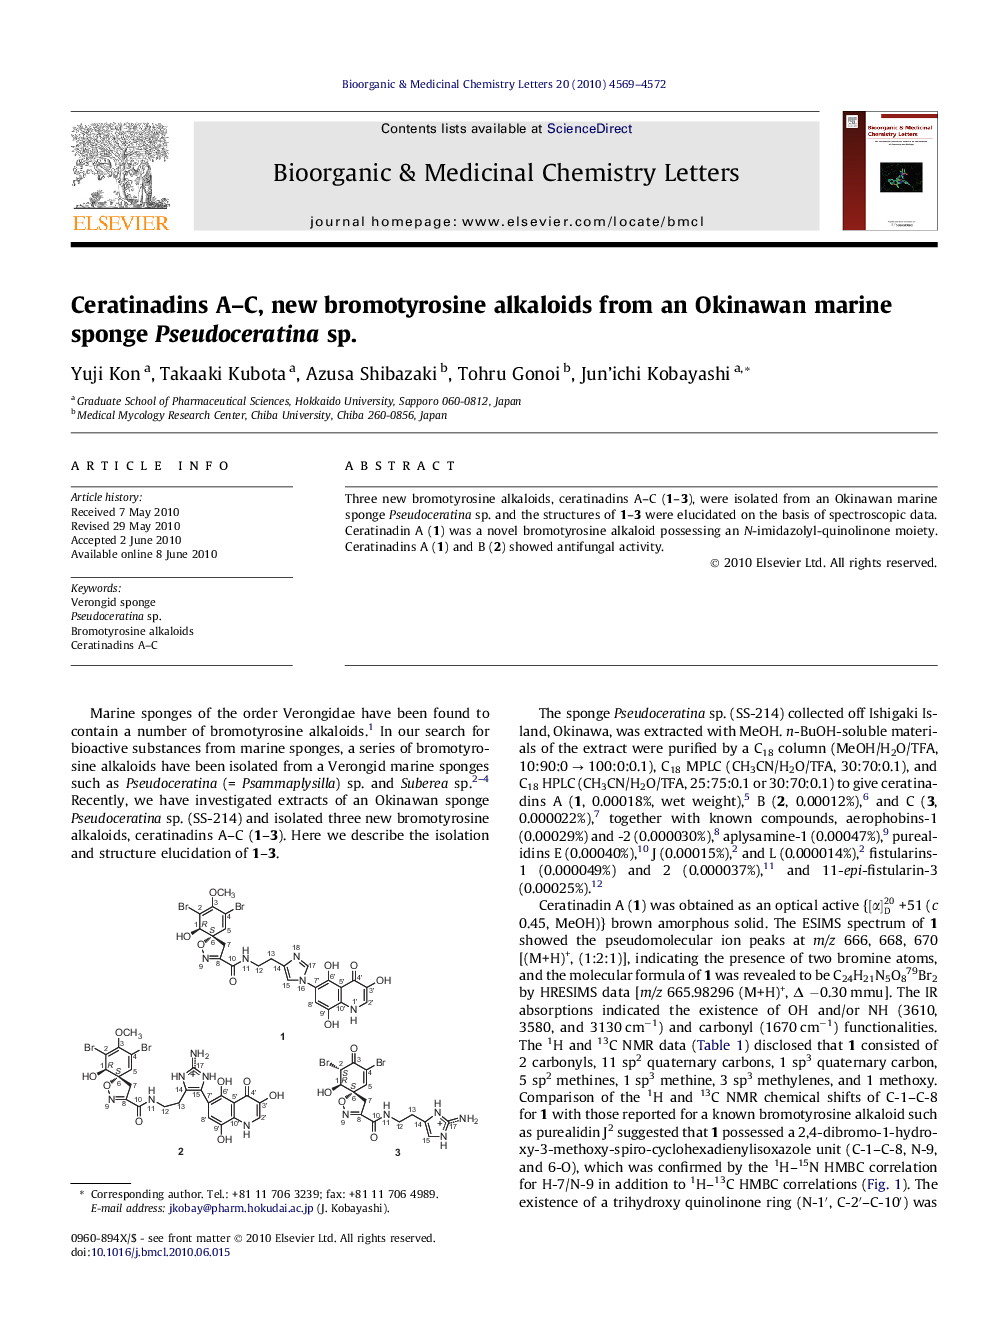 Ceratinadins A-C, new bromotyrosine alkaloids from an Okinawan marine sponge Pseudoceratina sp.